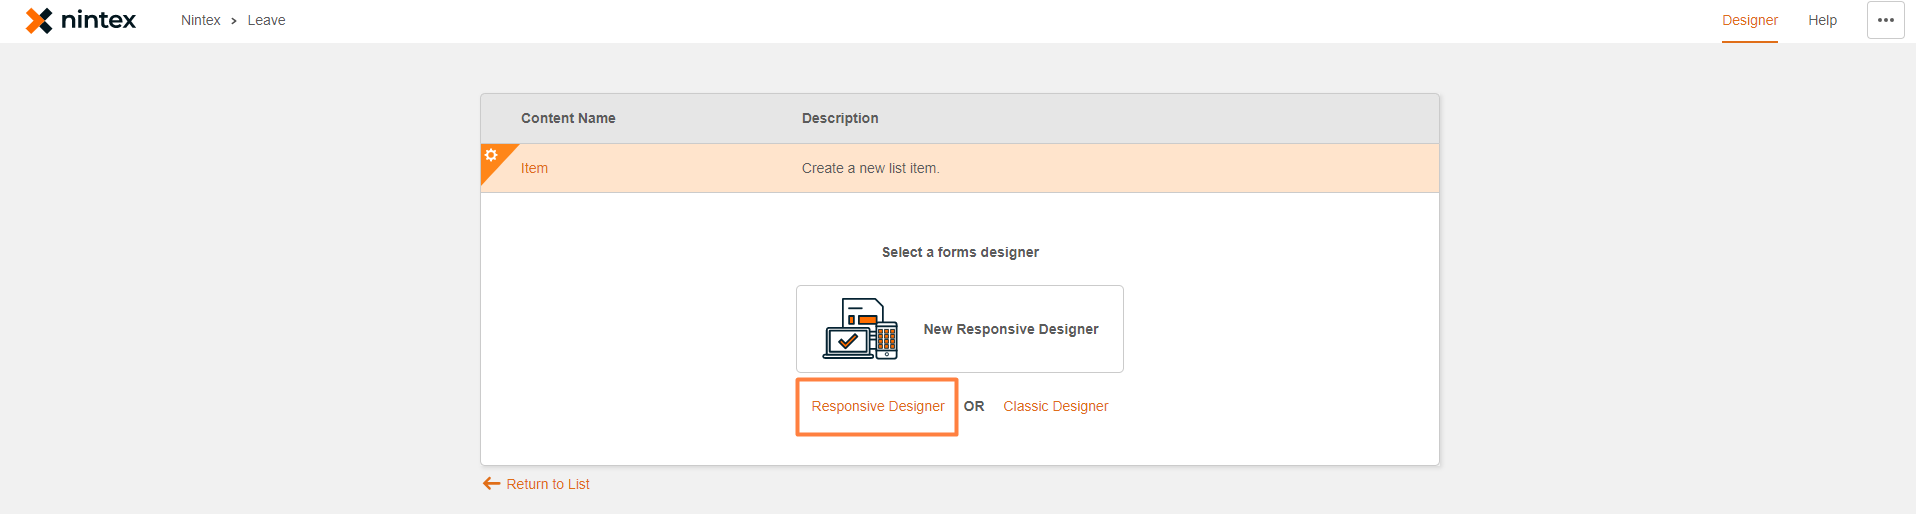 Responsive Designer Option